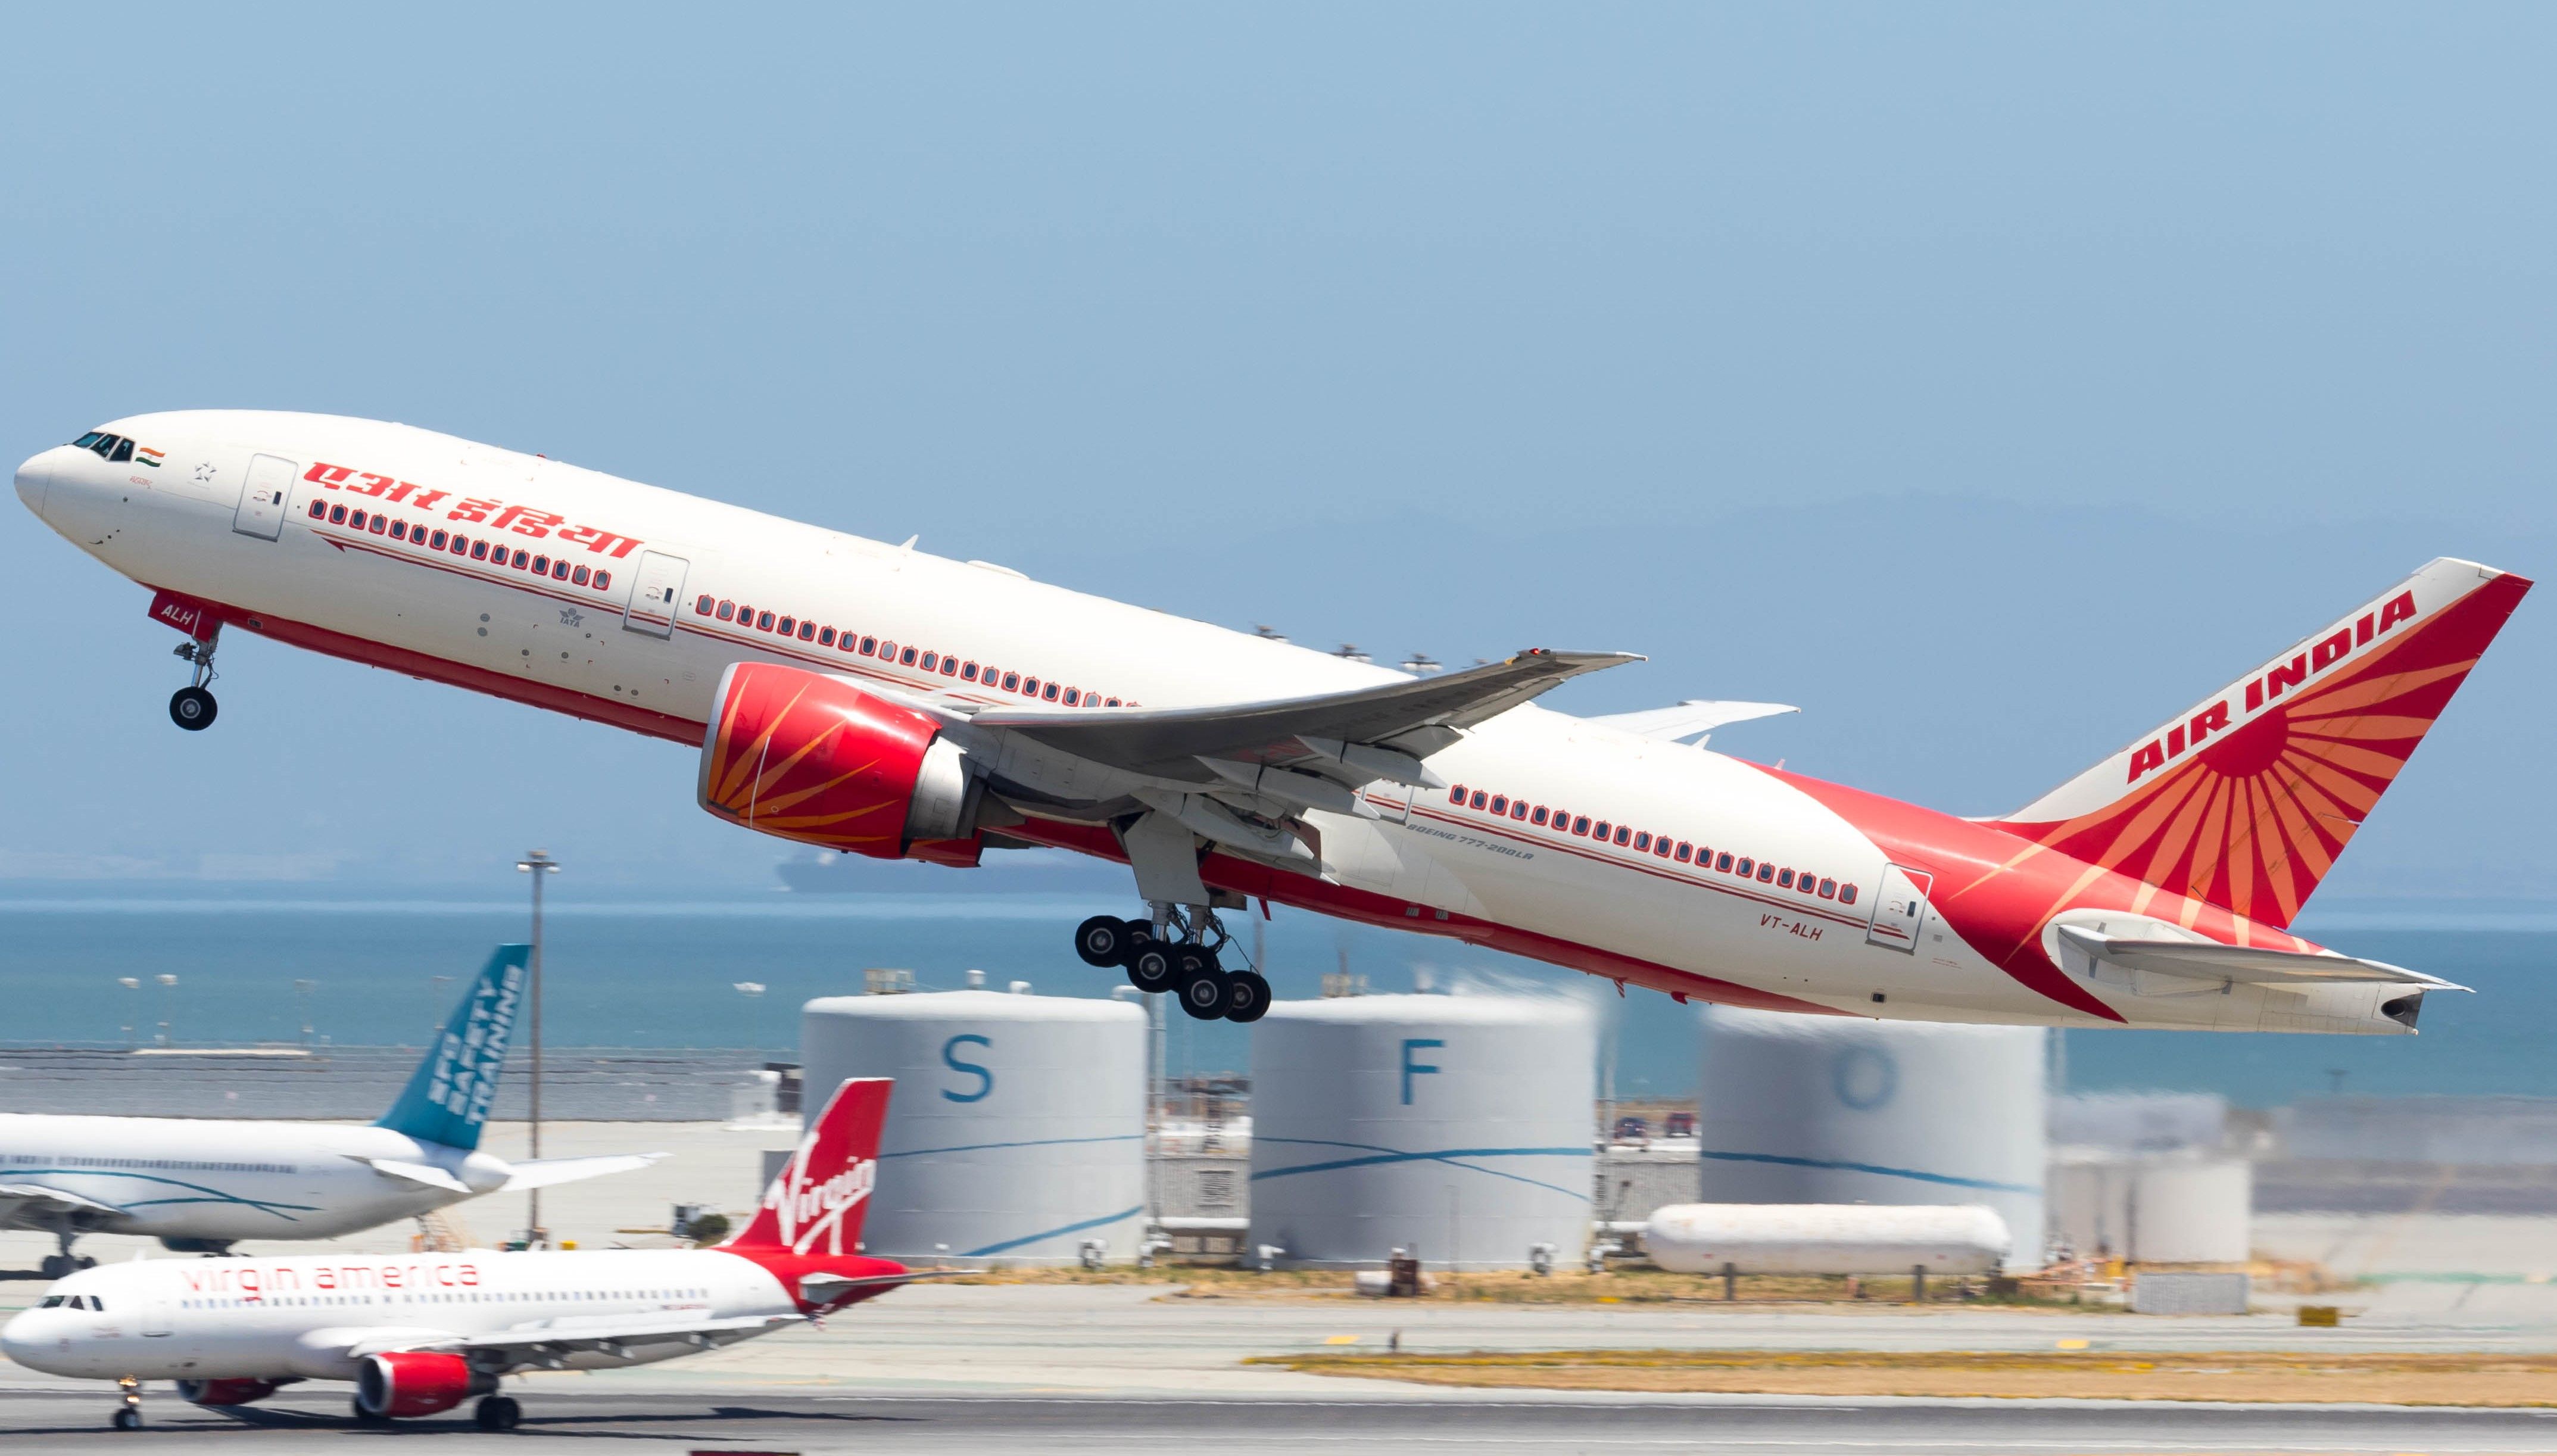 Air India Boeing 777-200LR departing San Francisco